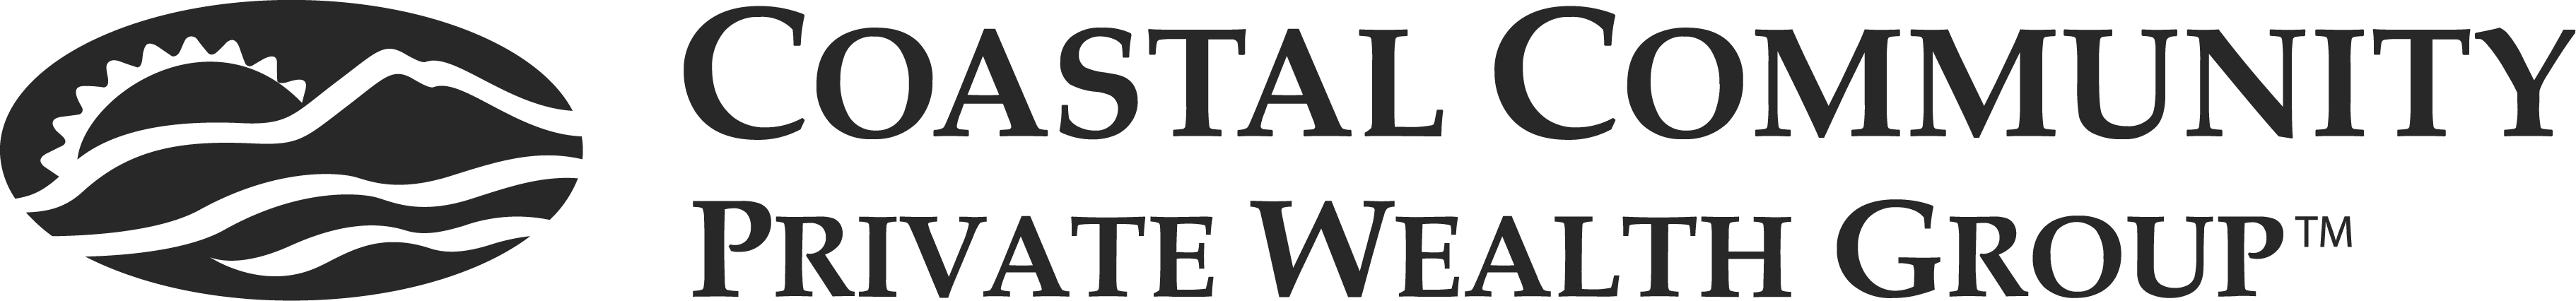 Coastal Community Private Wealth Group Logo